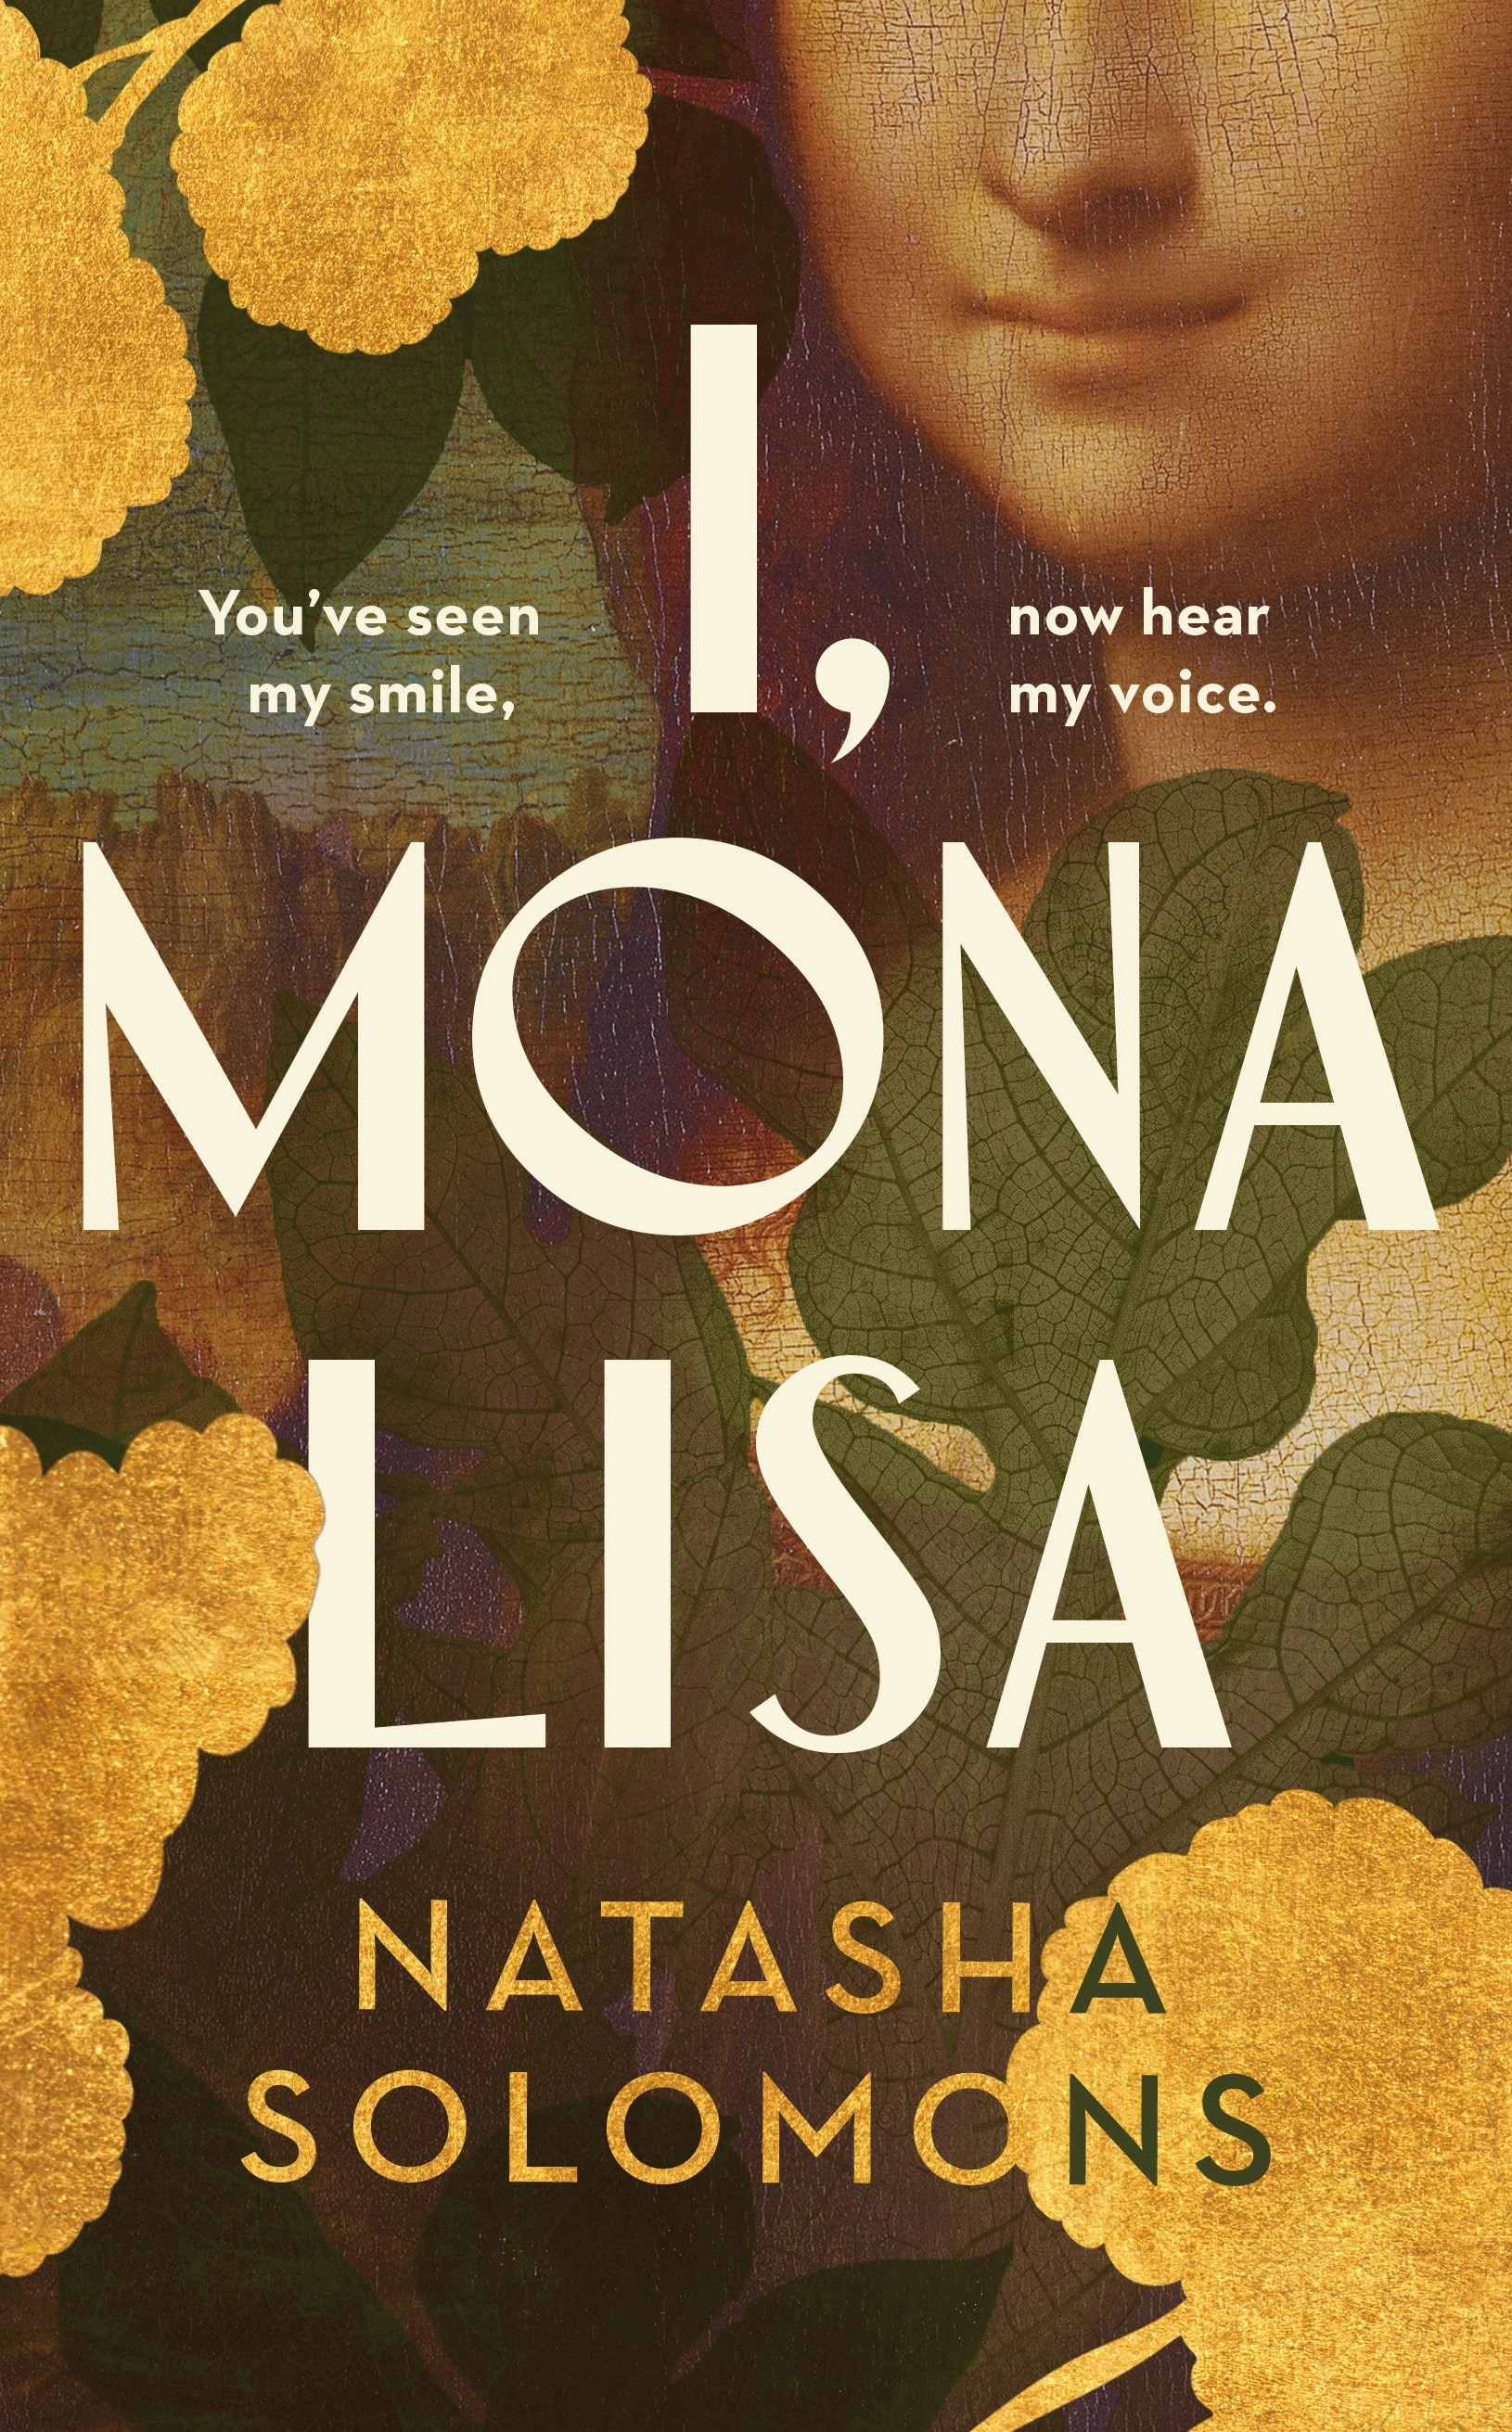 Book “I, Mona Lisa” by Natasha Solomons — February 10, 2022